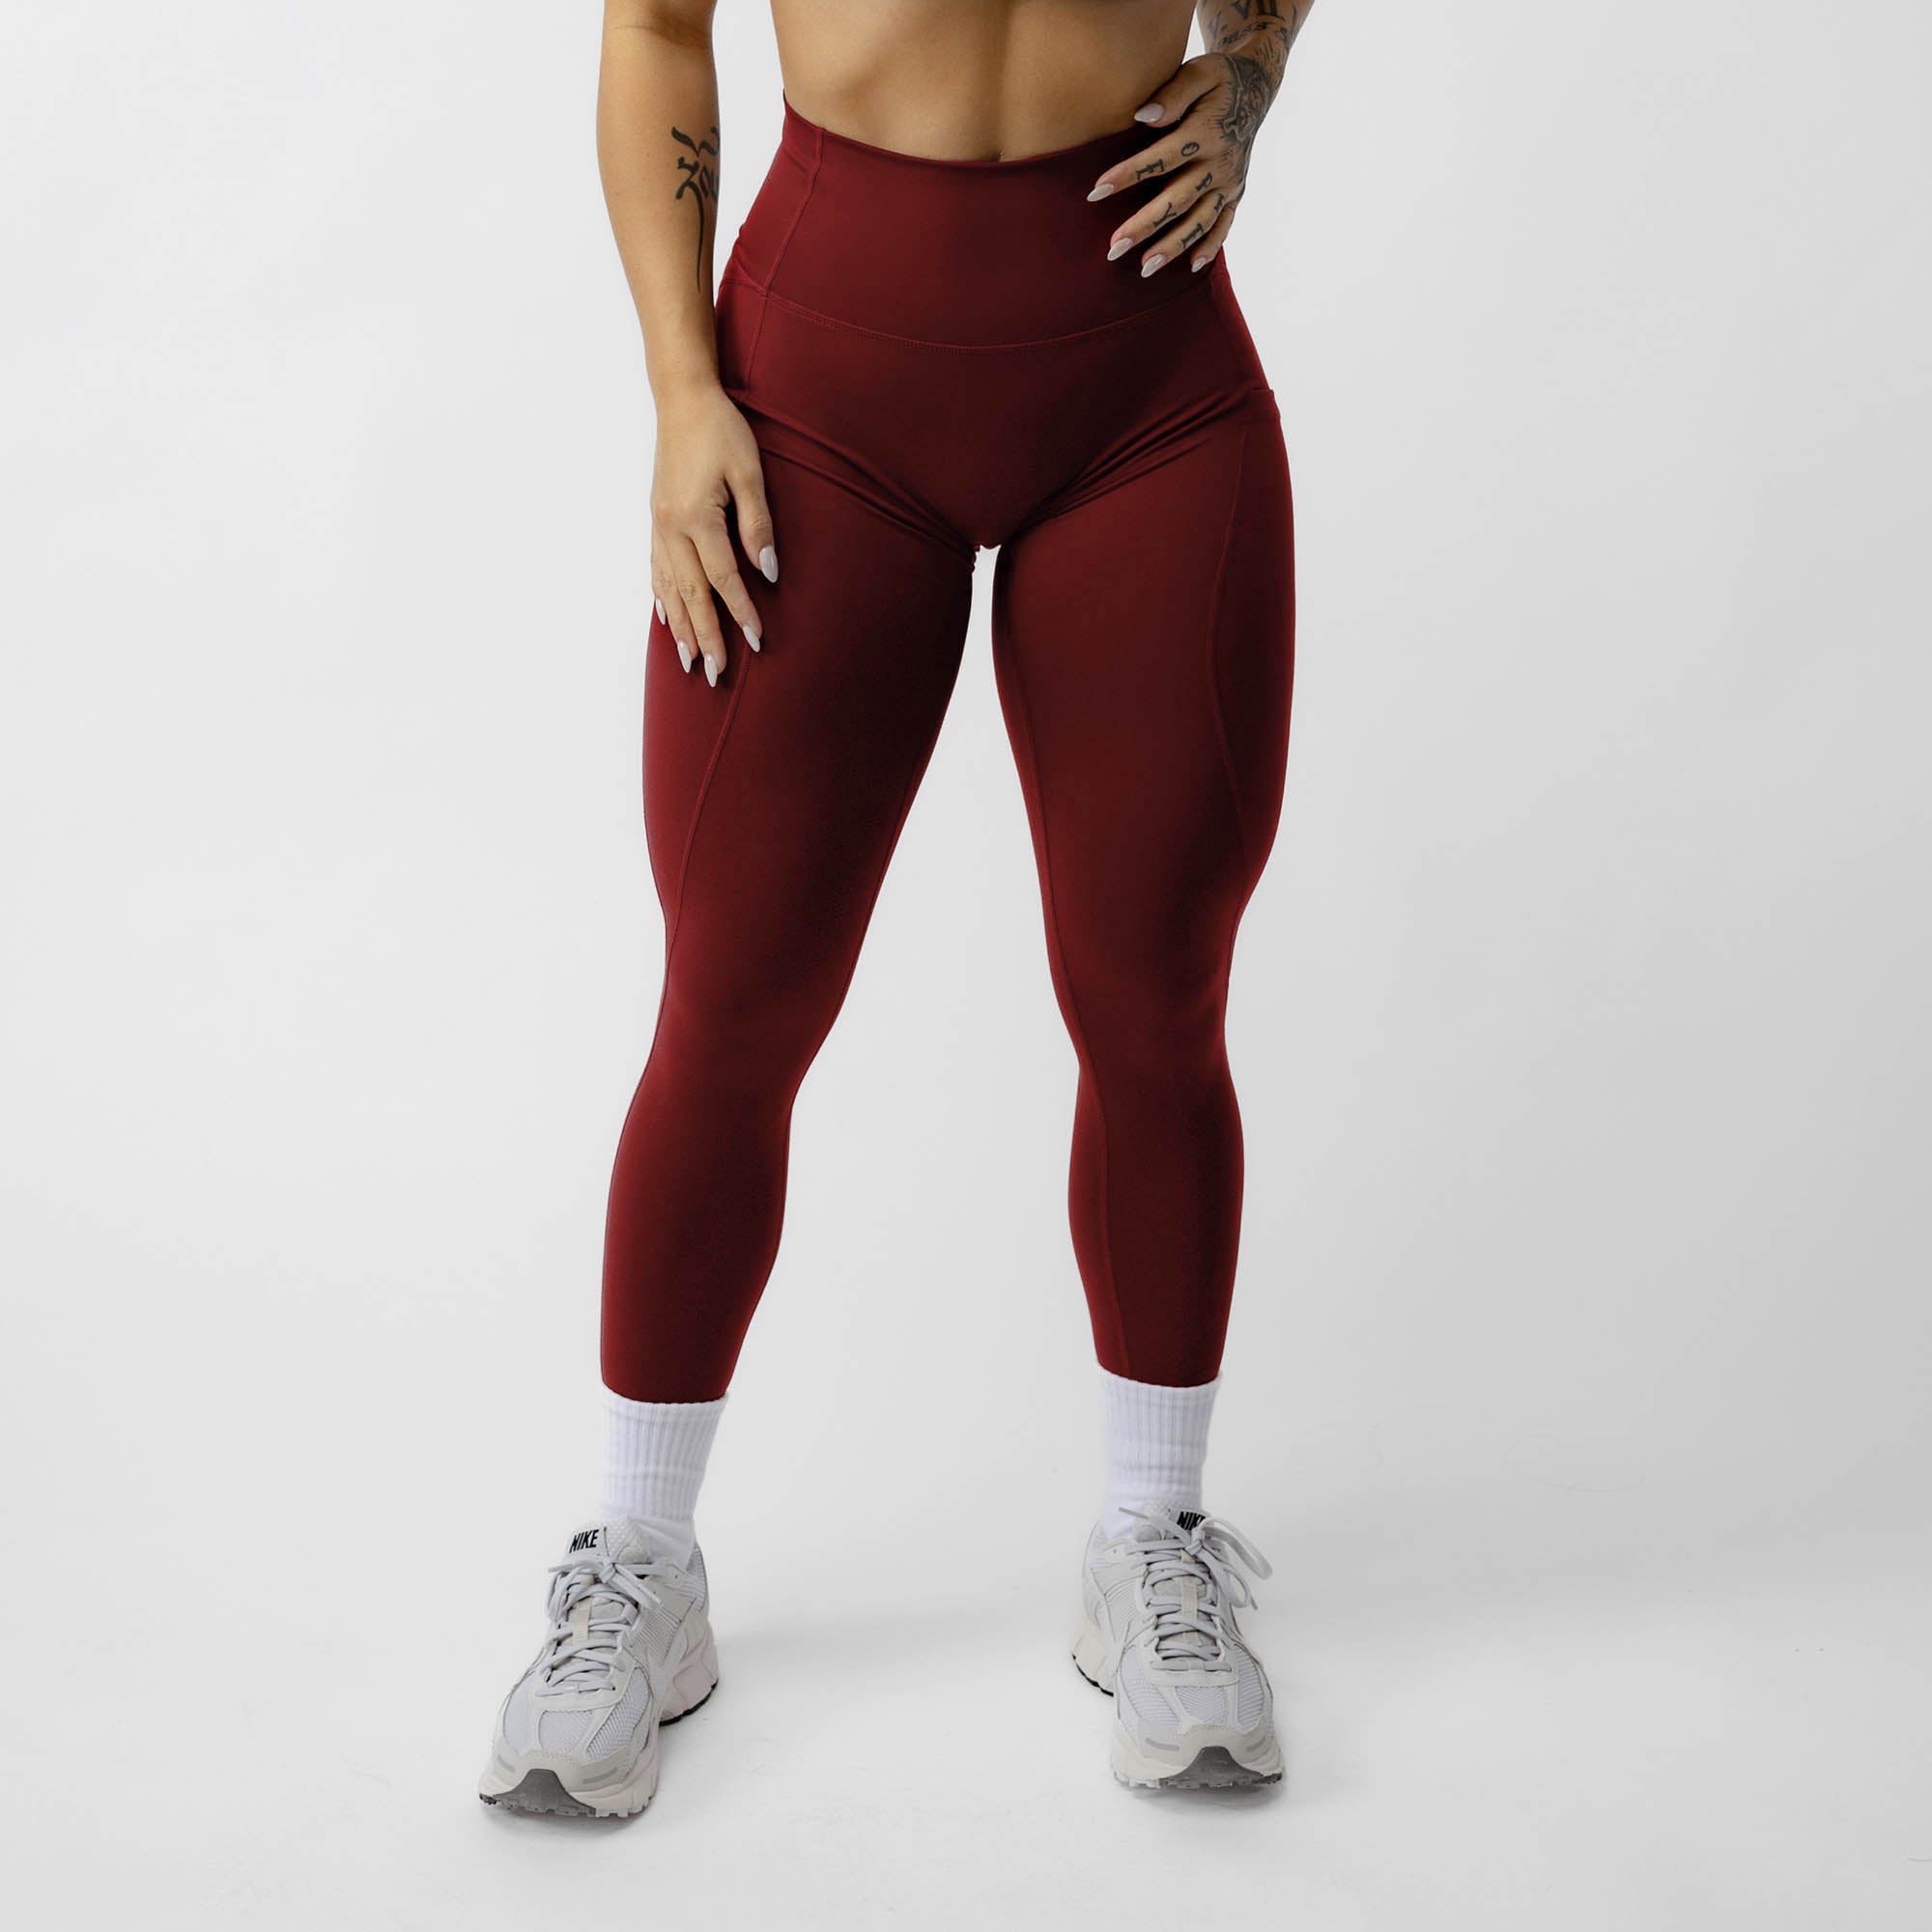 Nike Dry Fit Training Burgundy Stretch Skinny High Waist Leggings Size XL 